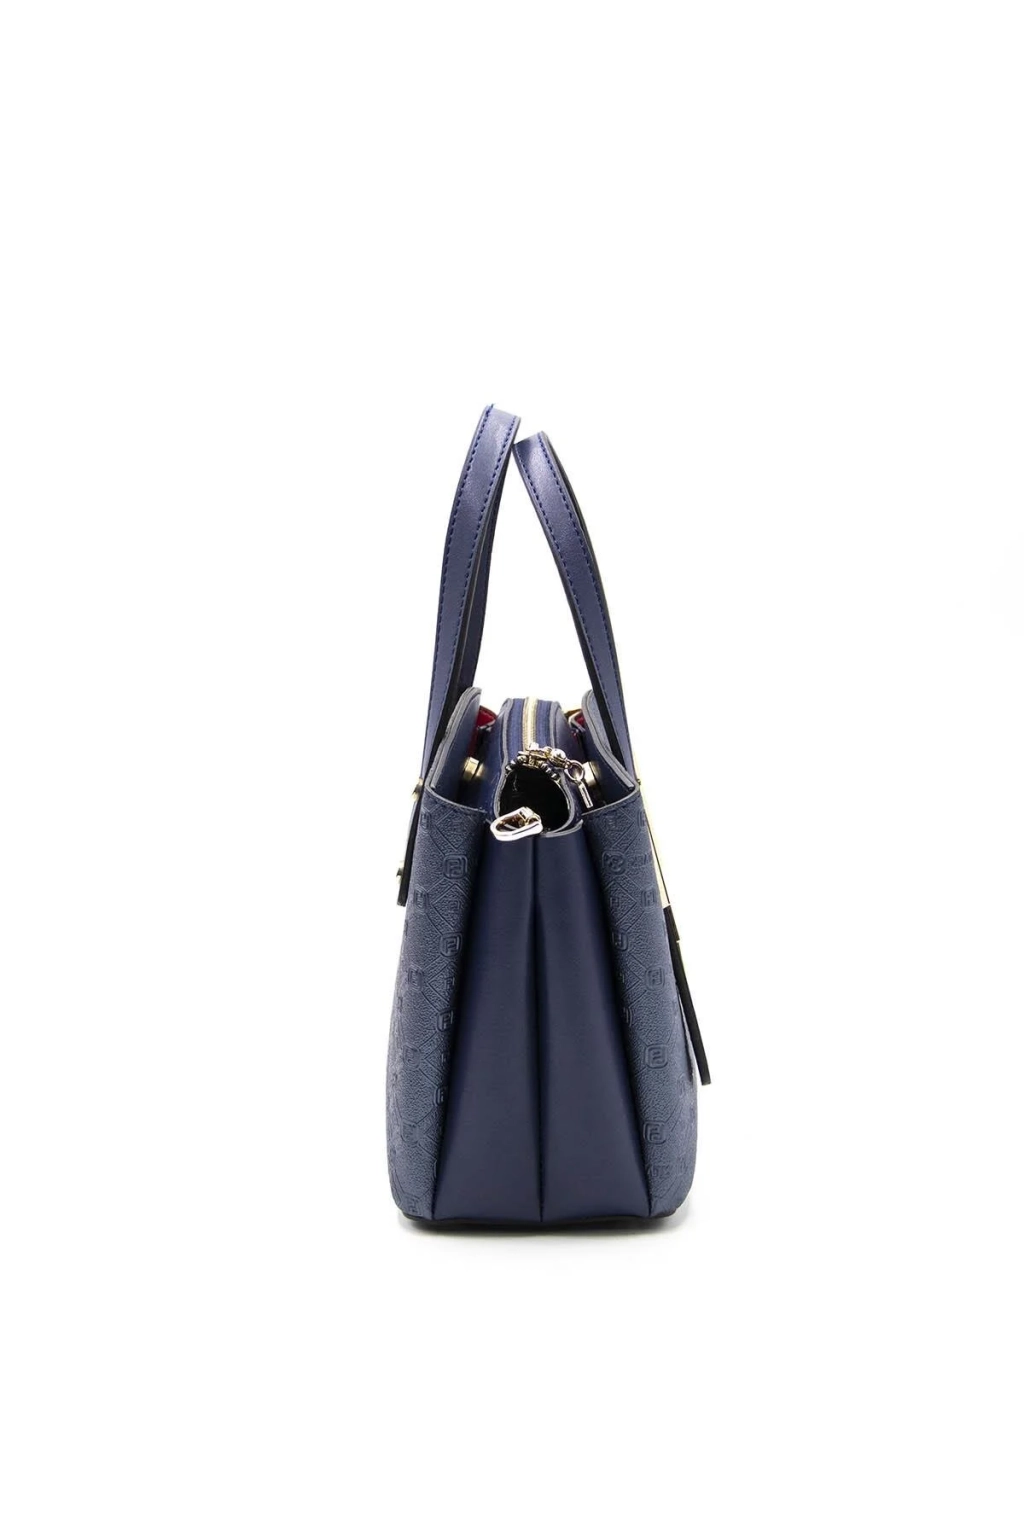 Кокетна чанта в цвят син релеф SILVER&POLO